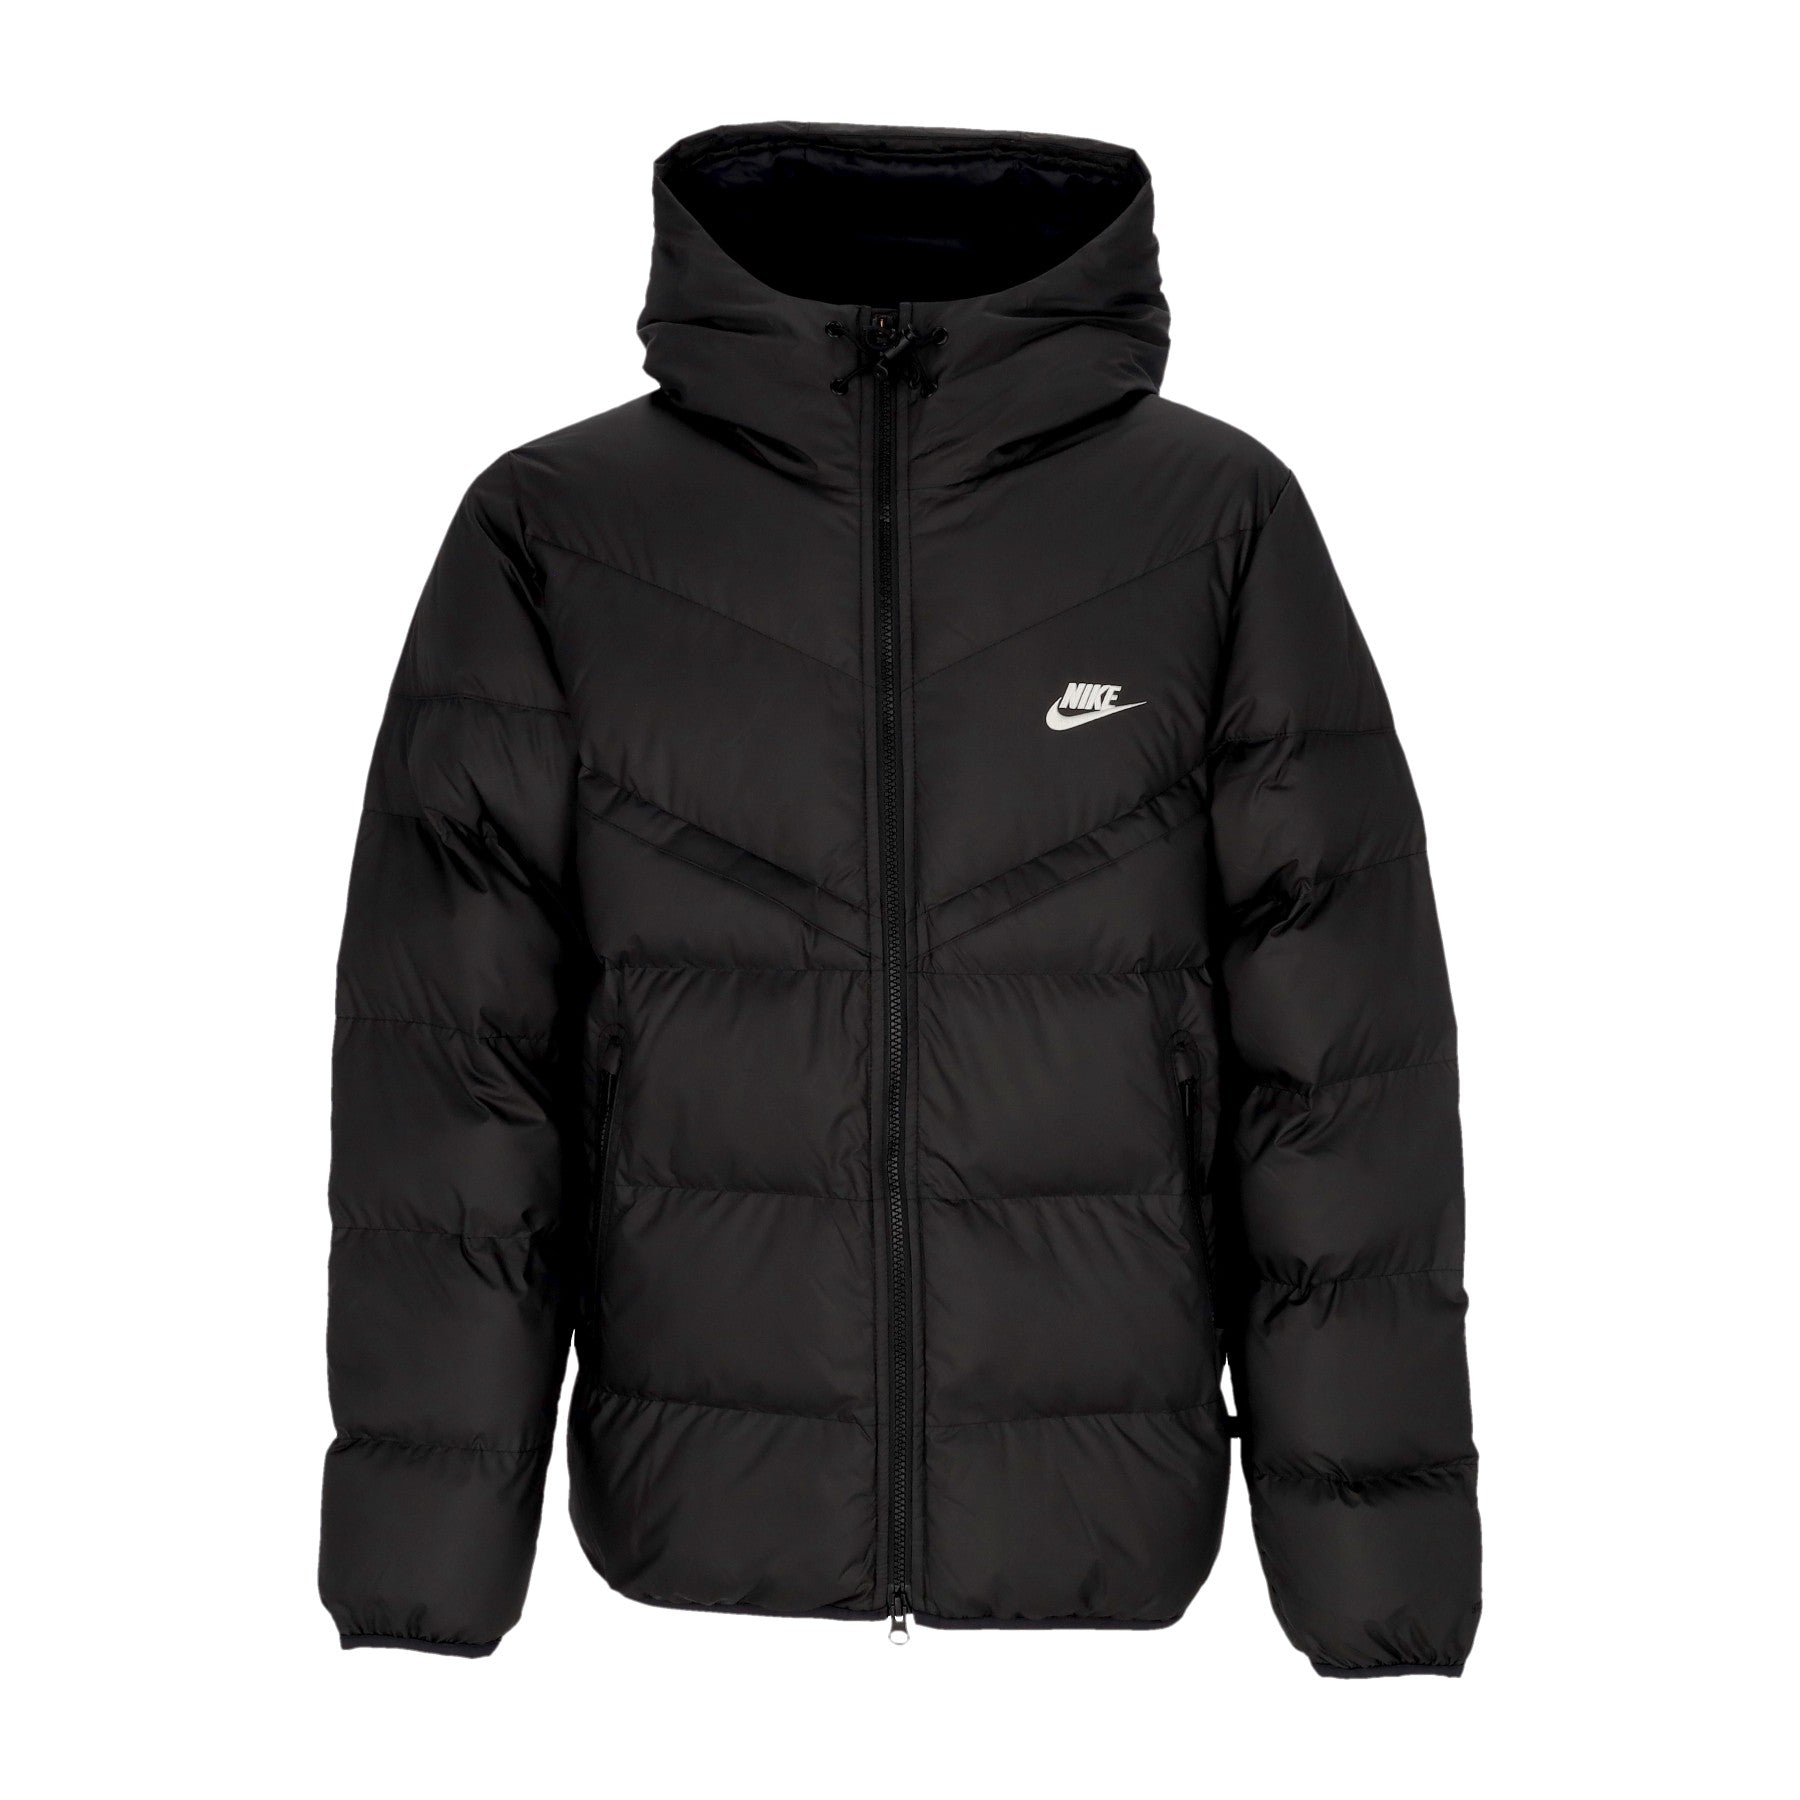 Nike, Piumino Uomo Storm Fit Windrunner Primaloft Hooded Jacket, Black/black/sail